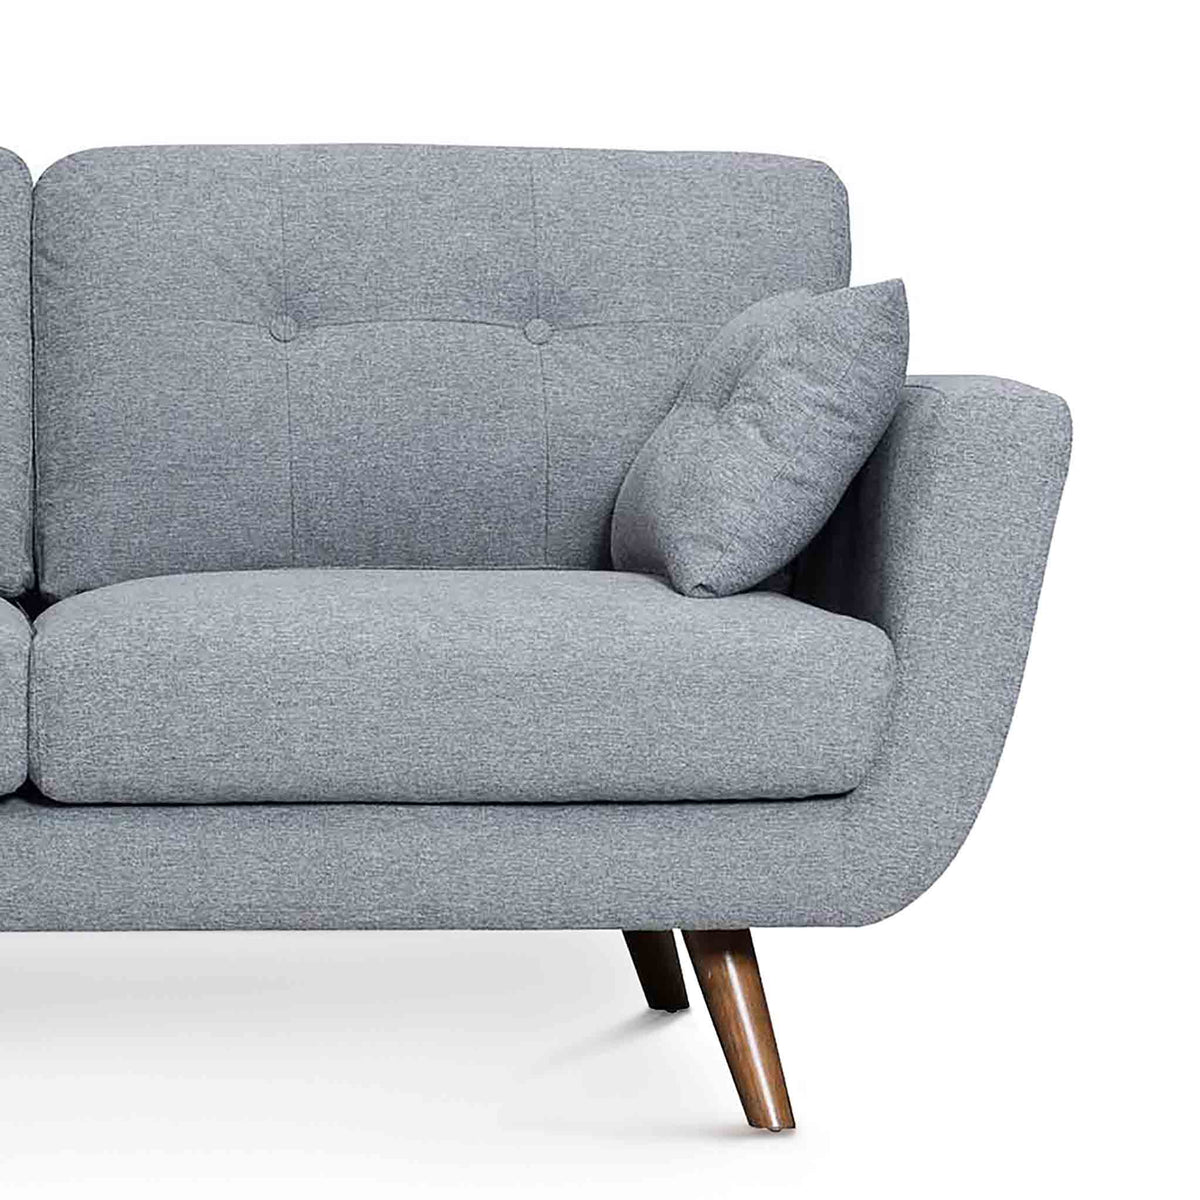 Trom Grey 2 Seater Sofa - Close up